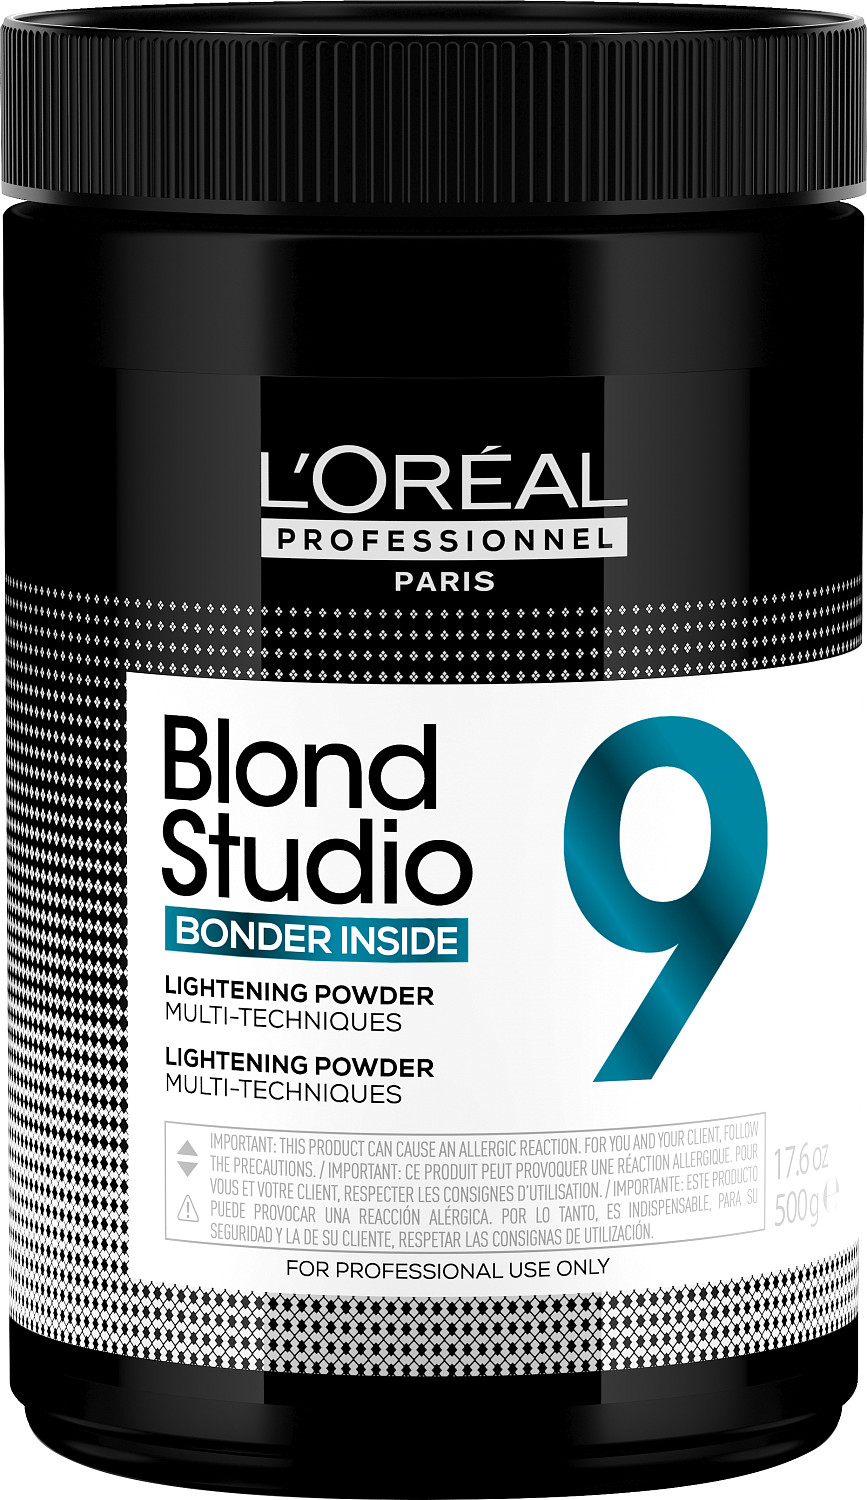  Loreal Blond Studio 9 Bonder Inside 500 g 